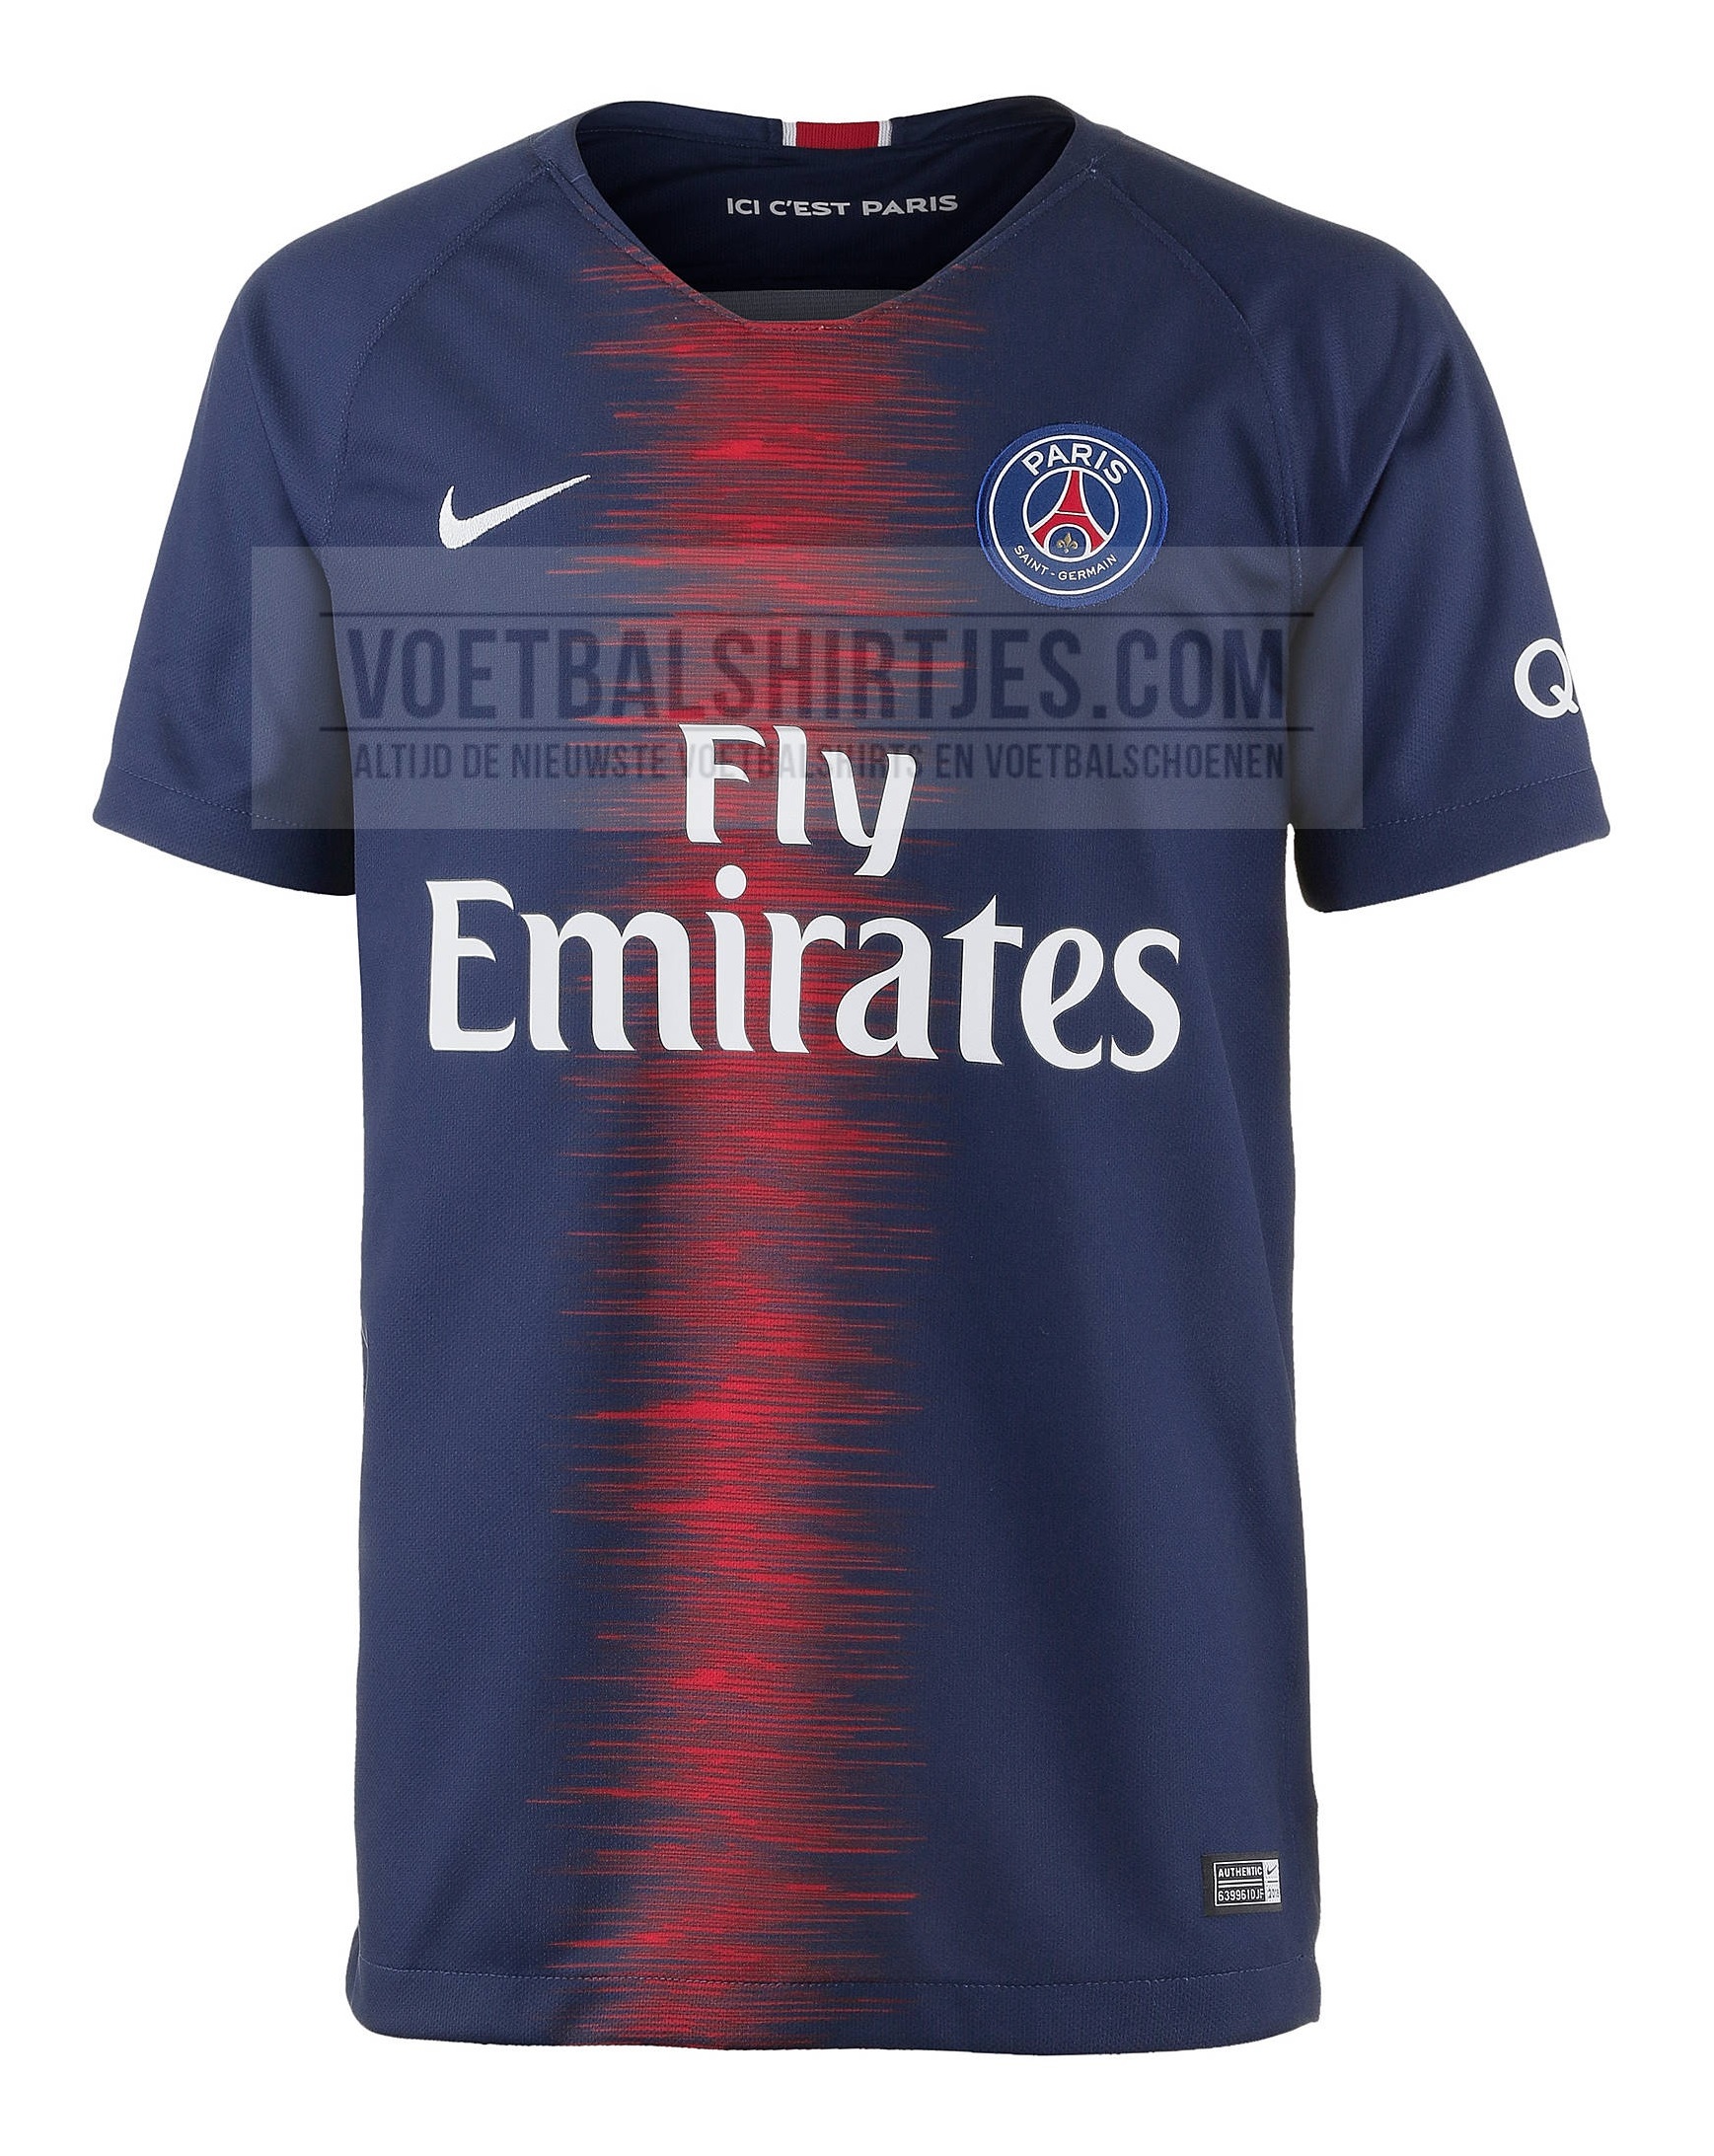 PSG shirt 2019